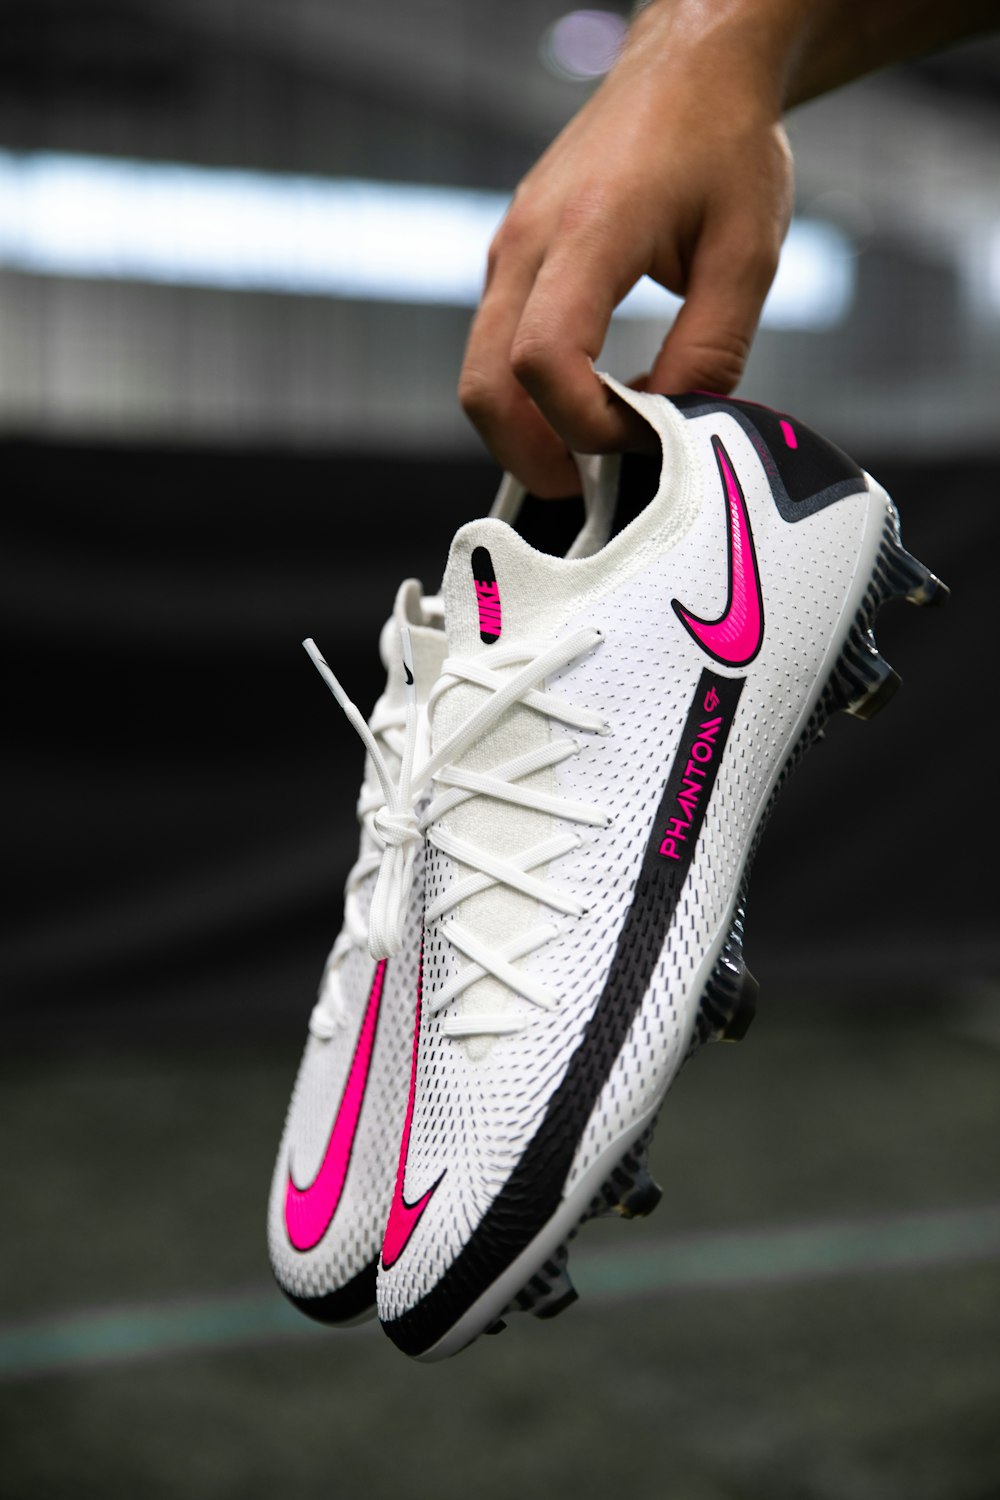 Foto tenis nike blancos y negros – Imagen Nike phantom gt elite fg gratis  en Unsplash